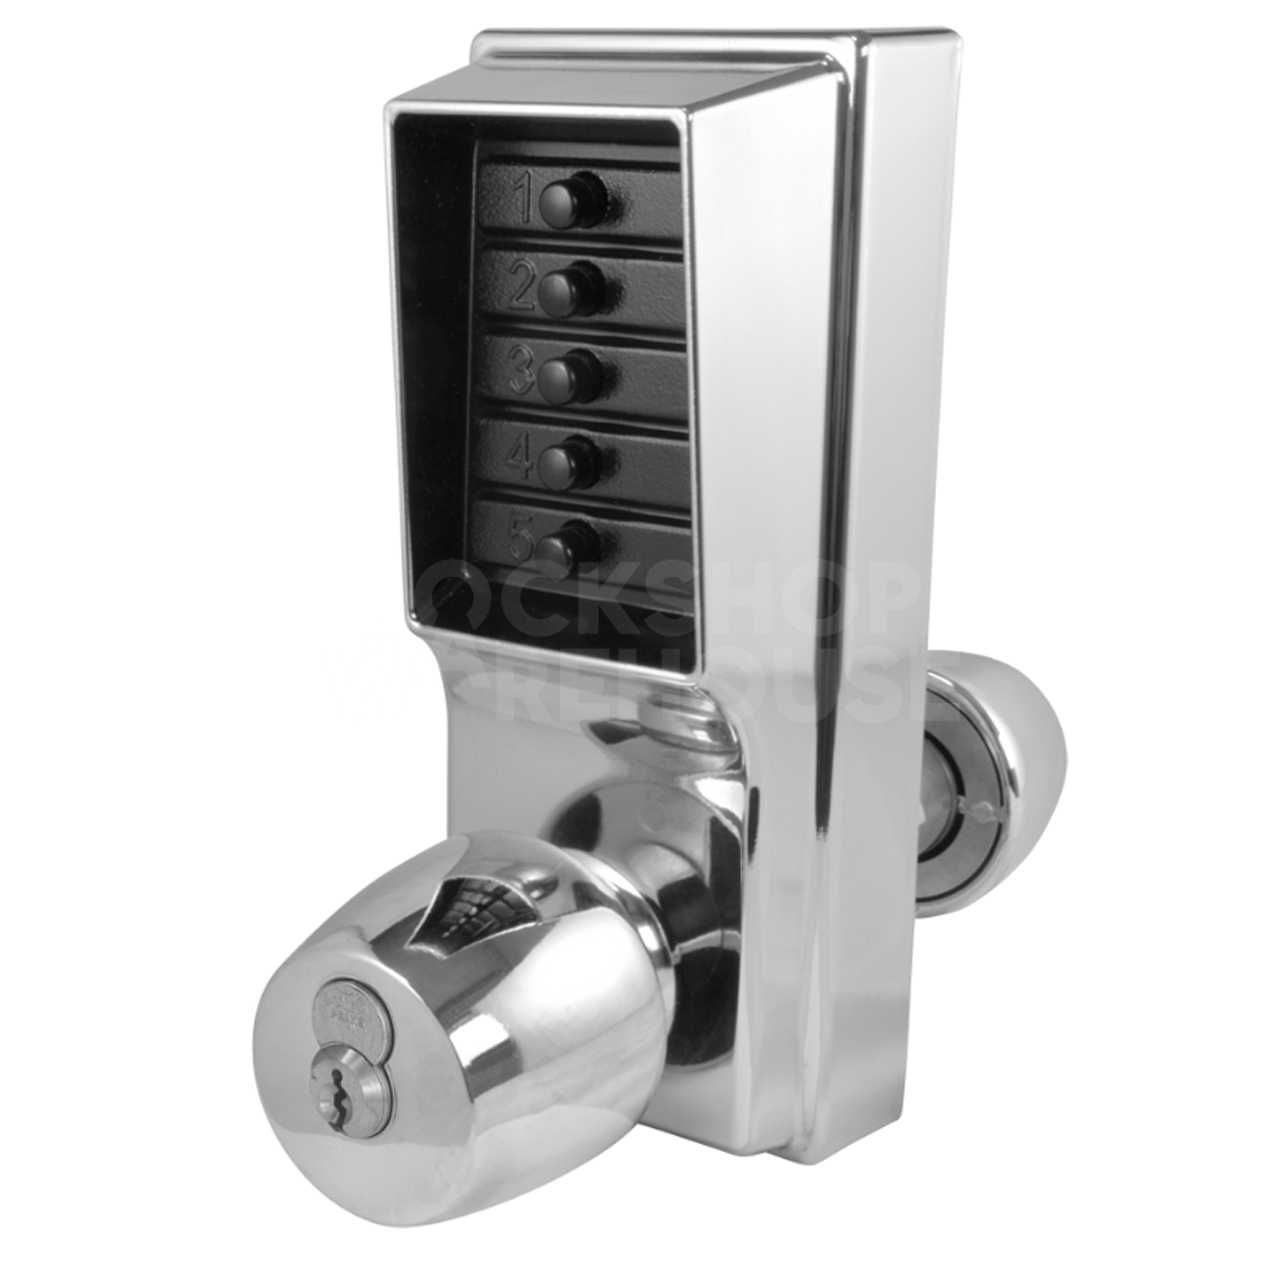 Kaba 1021B (1000-2) Mechanical Digital Combination Lock with Key Bypass